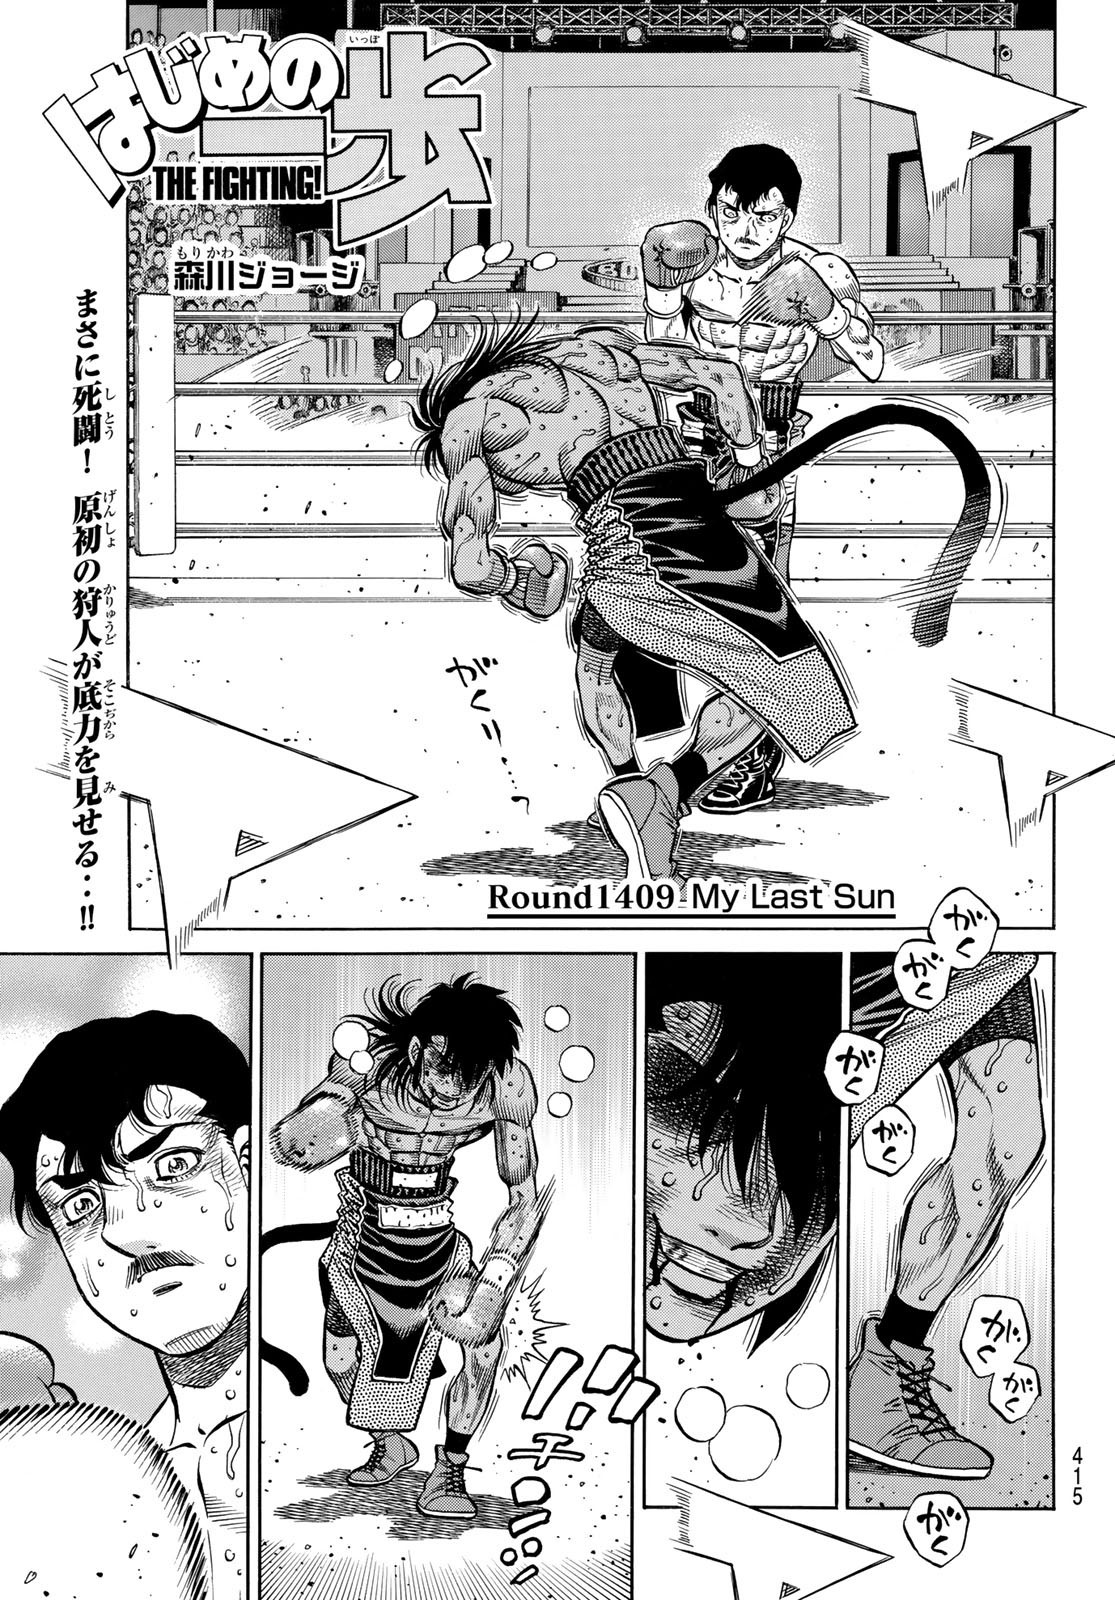 Hajime no Ippo - Chapter 1409 - Page 1